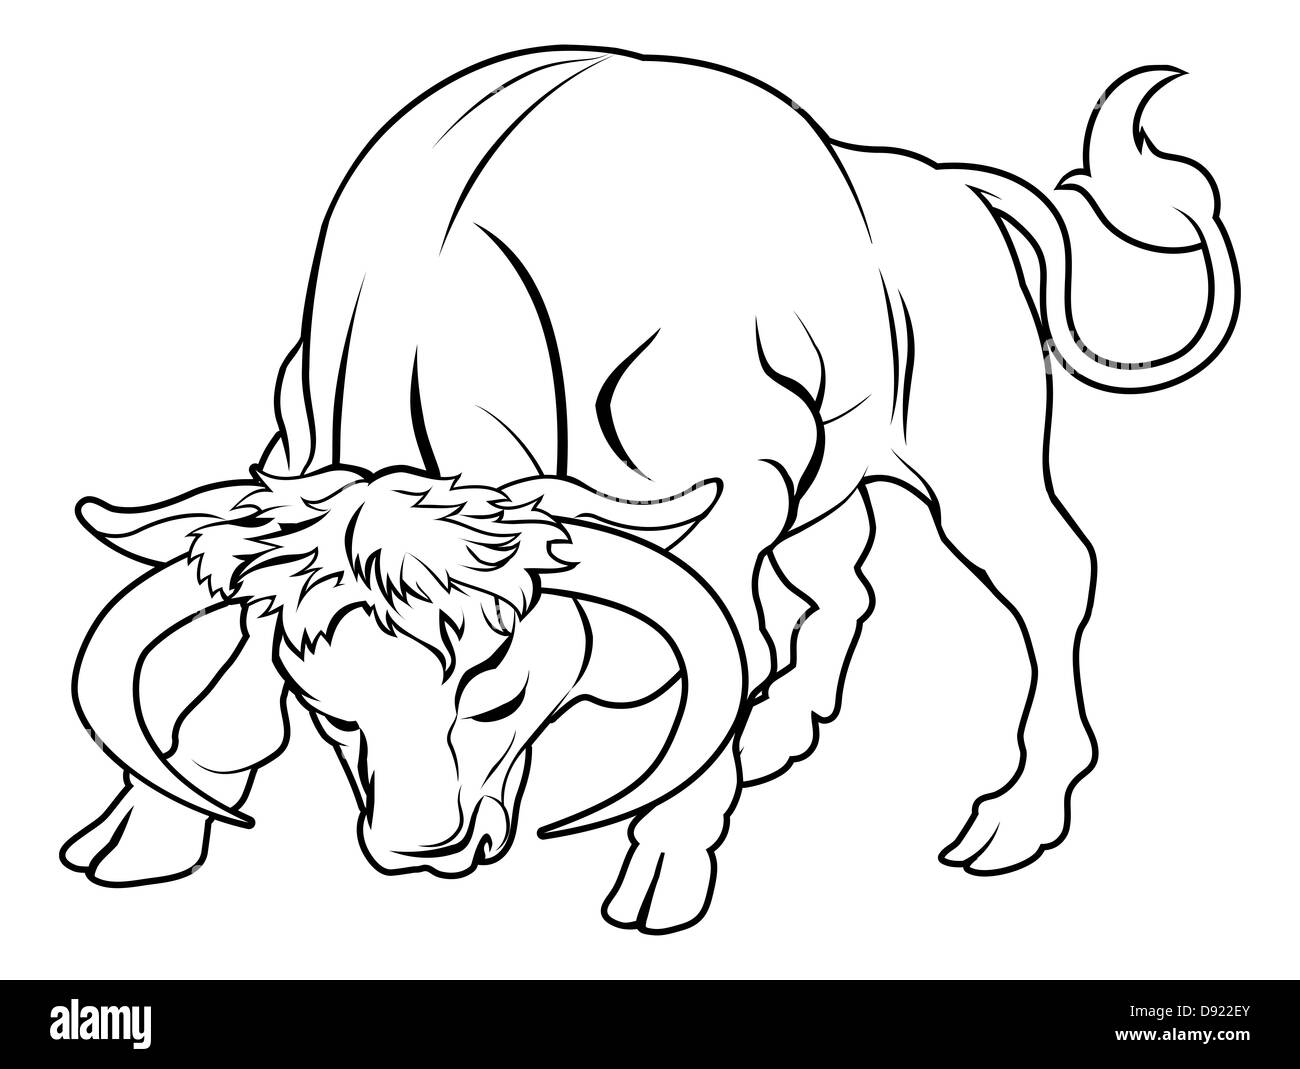 Bull tattoo meaning interpretation history photo drawings sketches